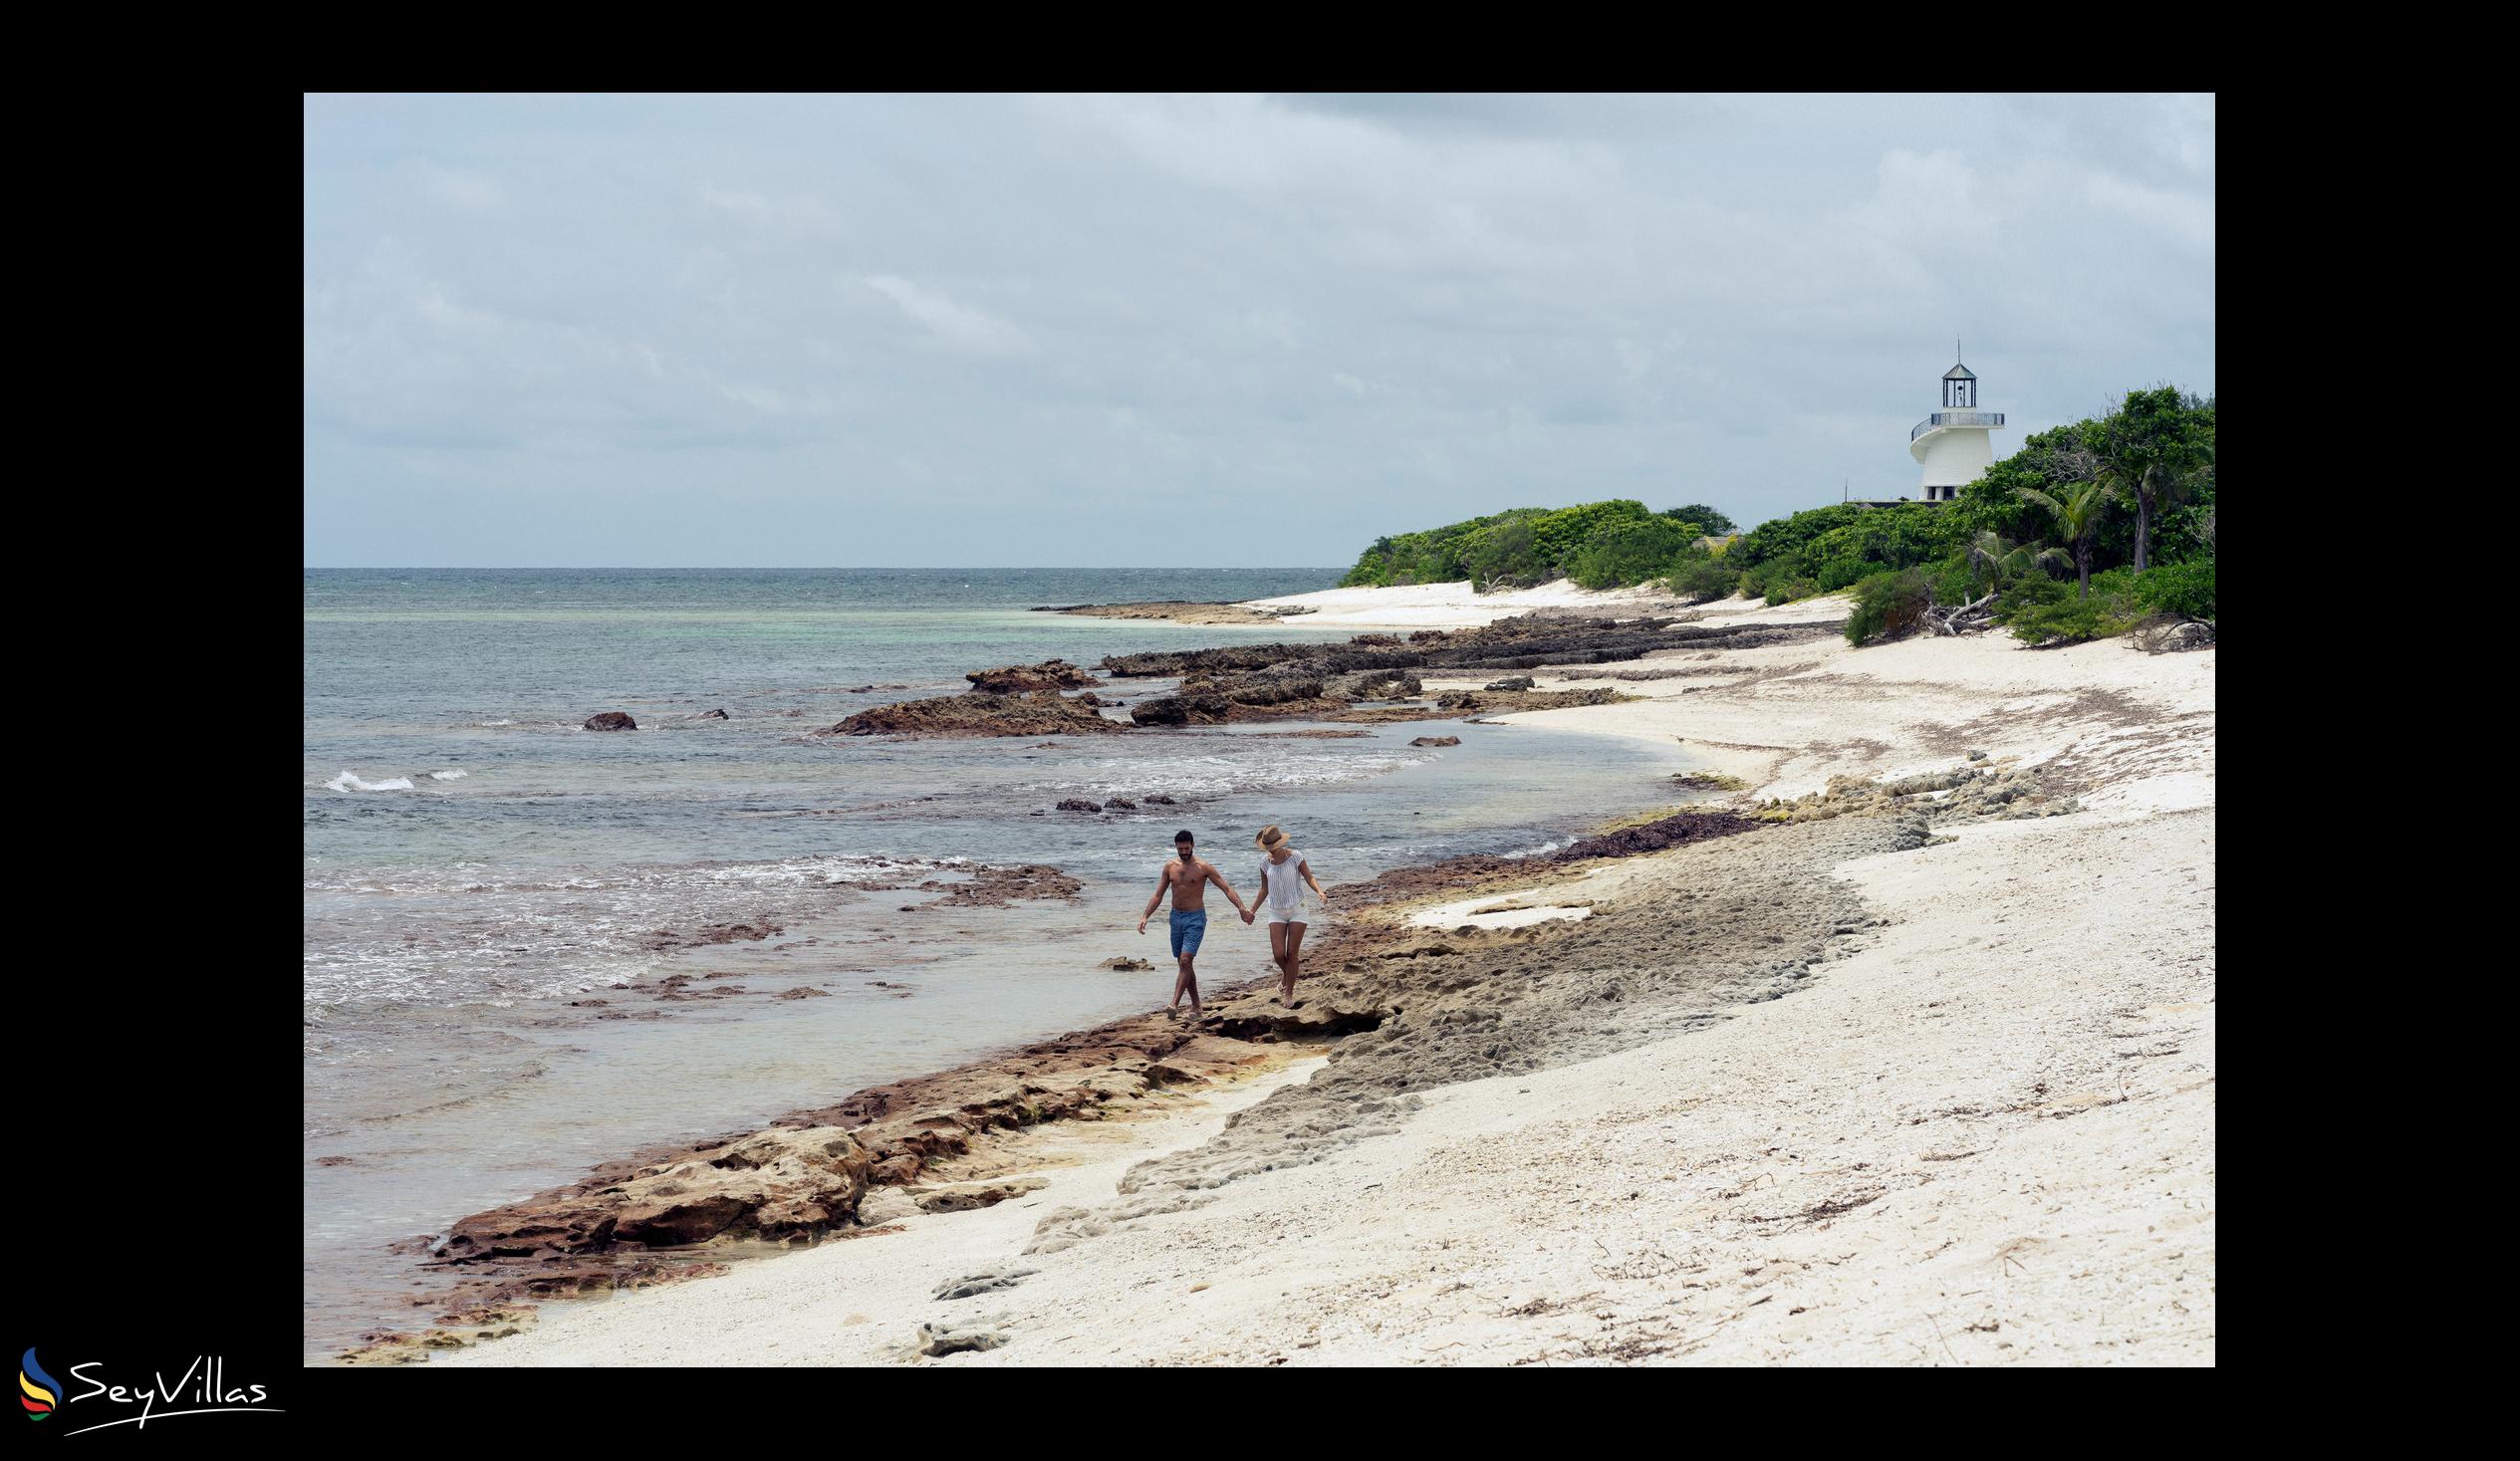 Photo 175: Four Seasons Resort Desroches Island - Location - Desroches Island (Seychelles)